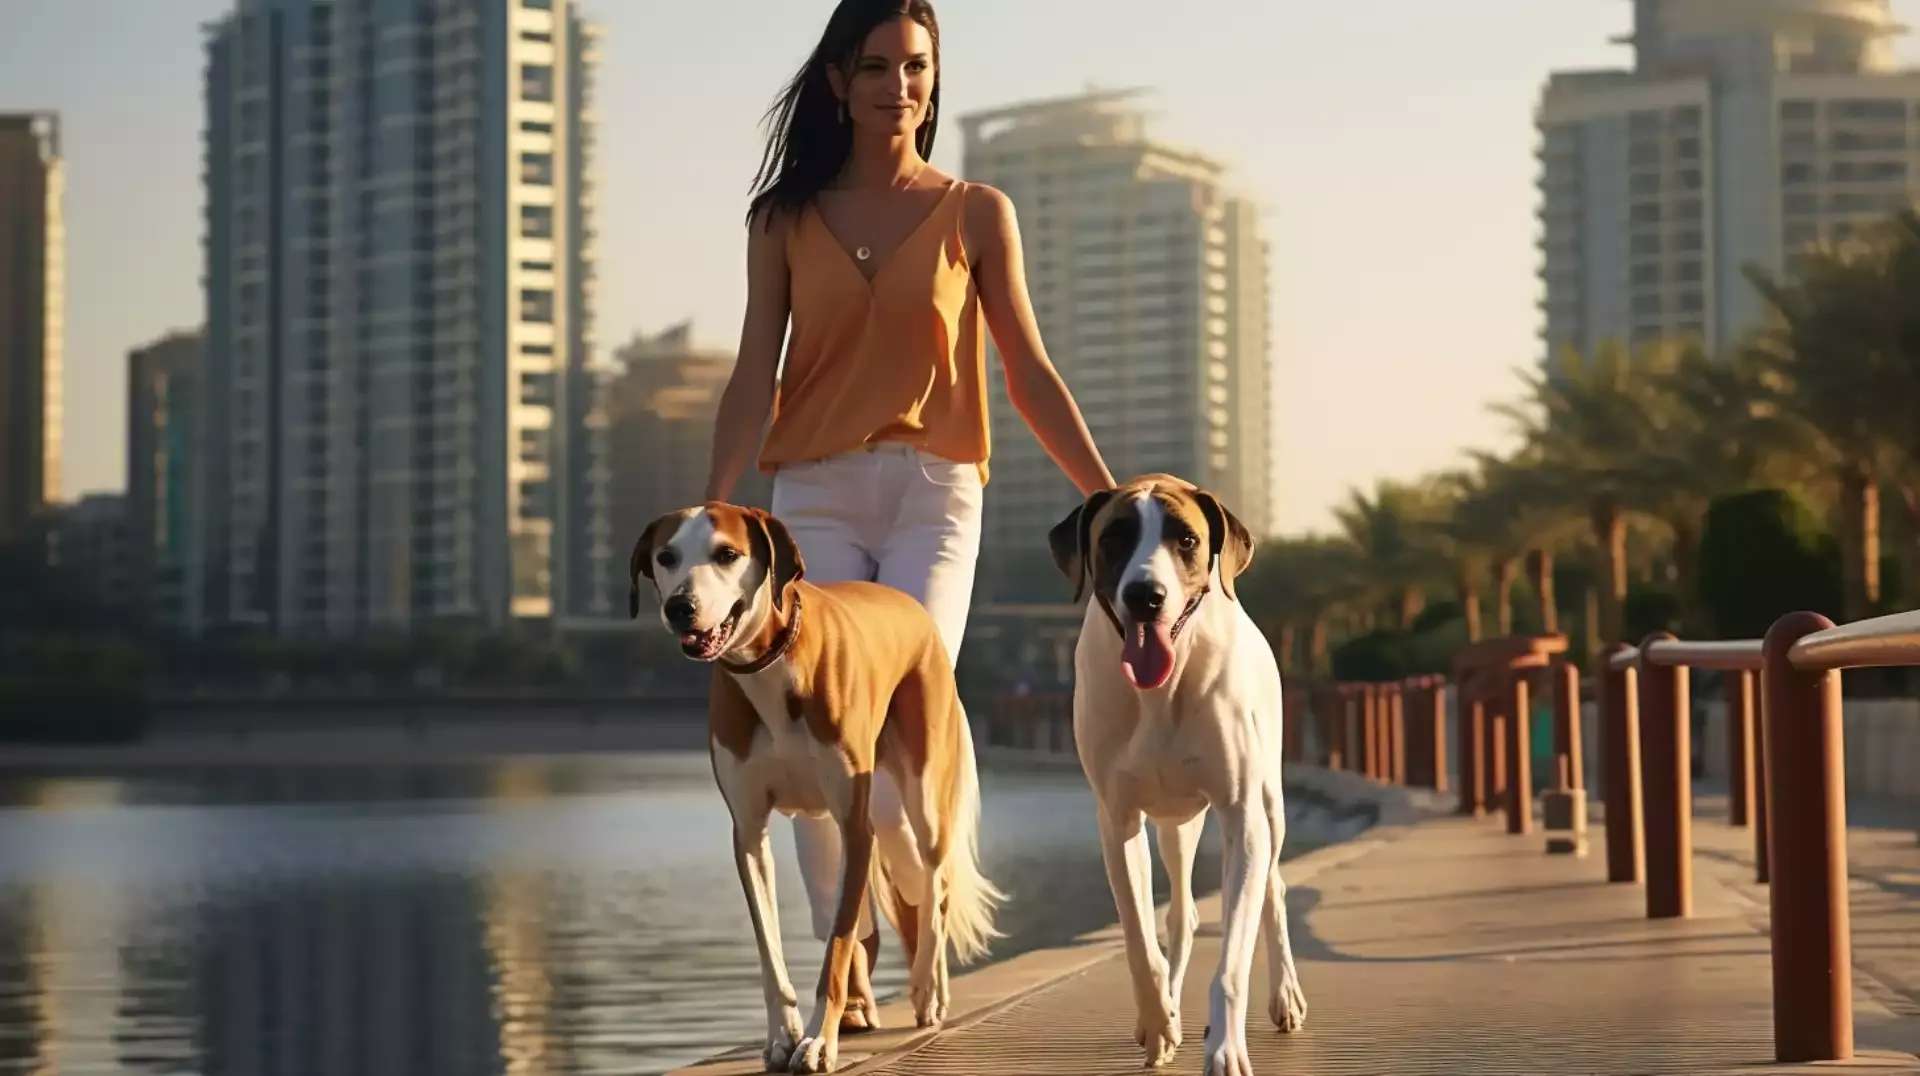 Pet-Friendly Policies at Neighborhood Arabian Ranches - Dubai 